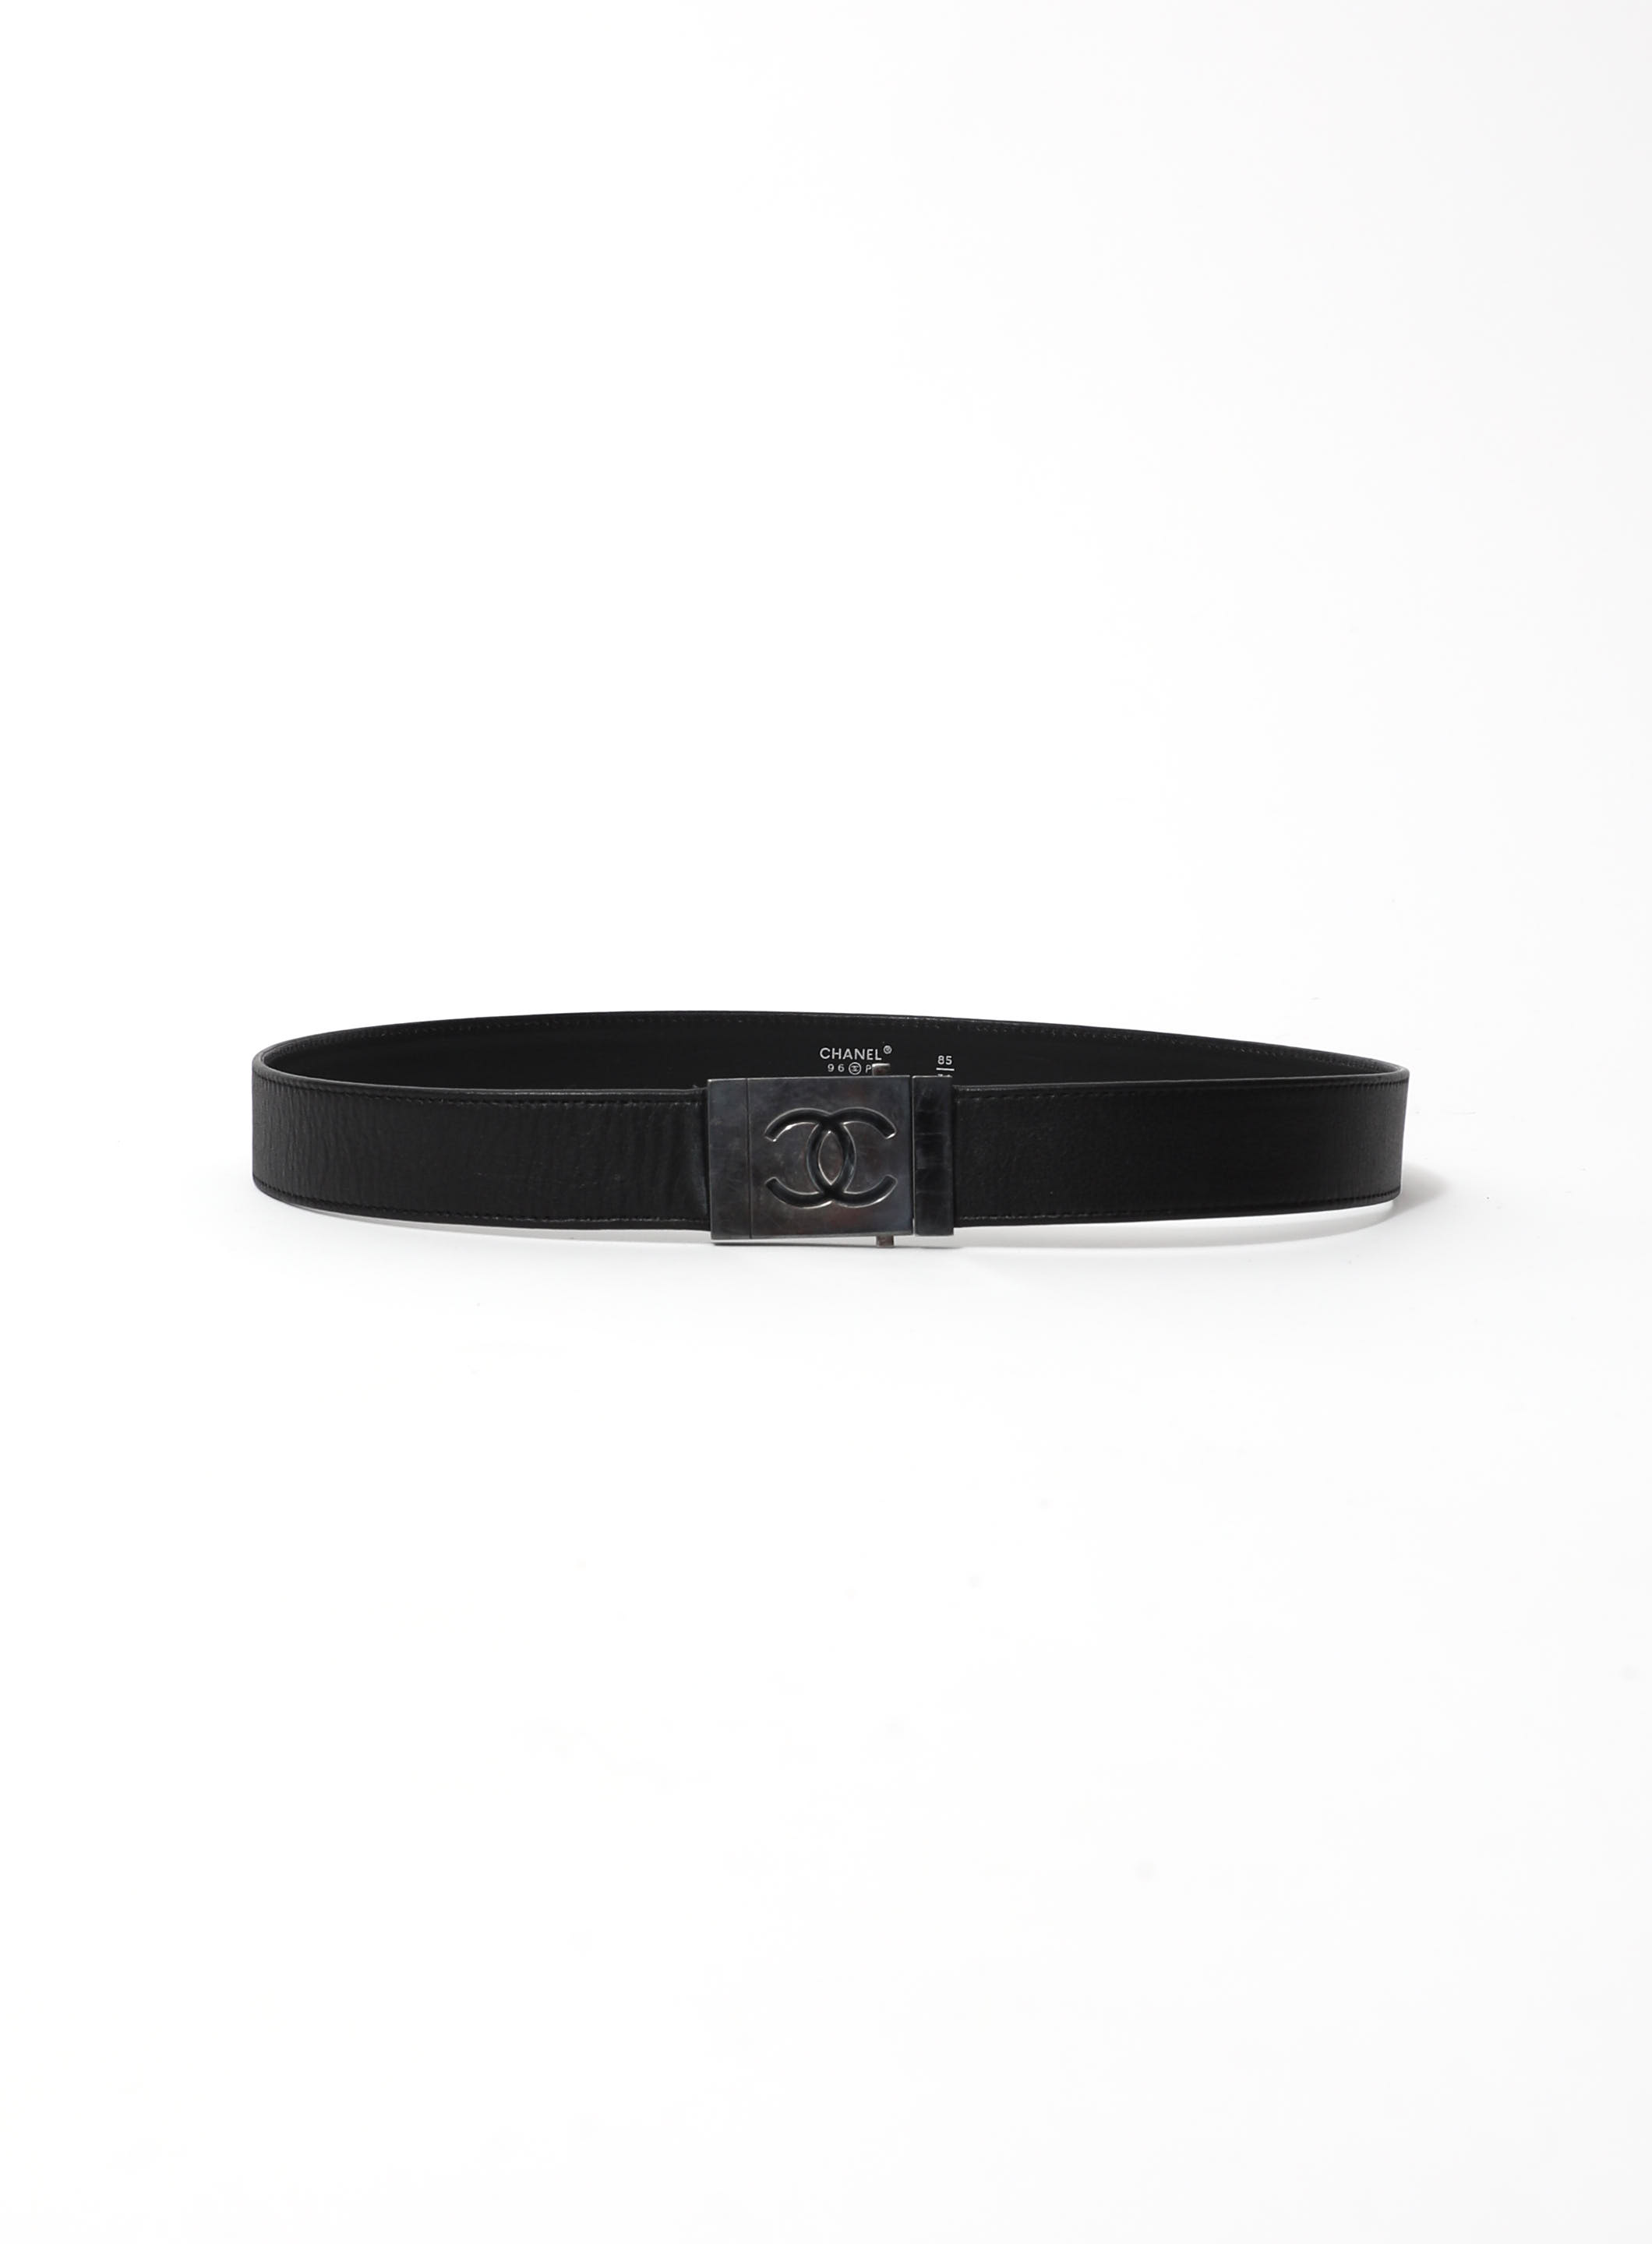 chanel belt black